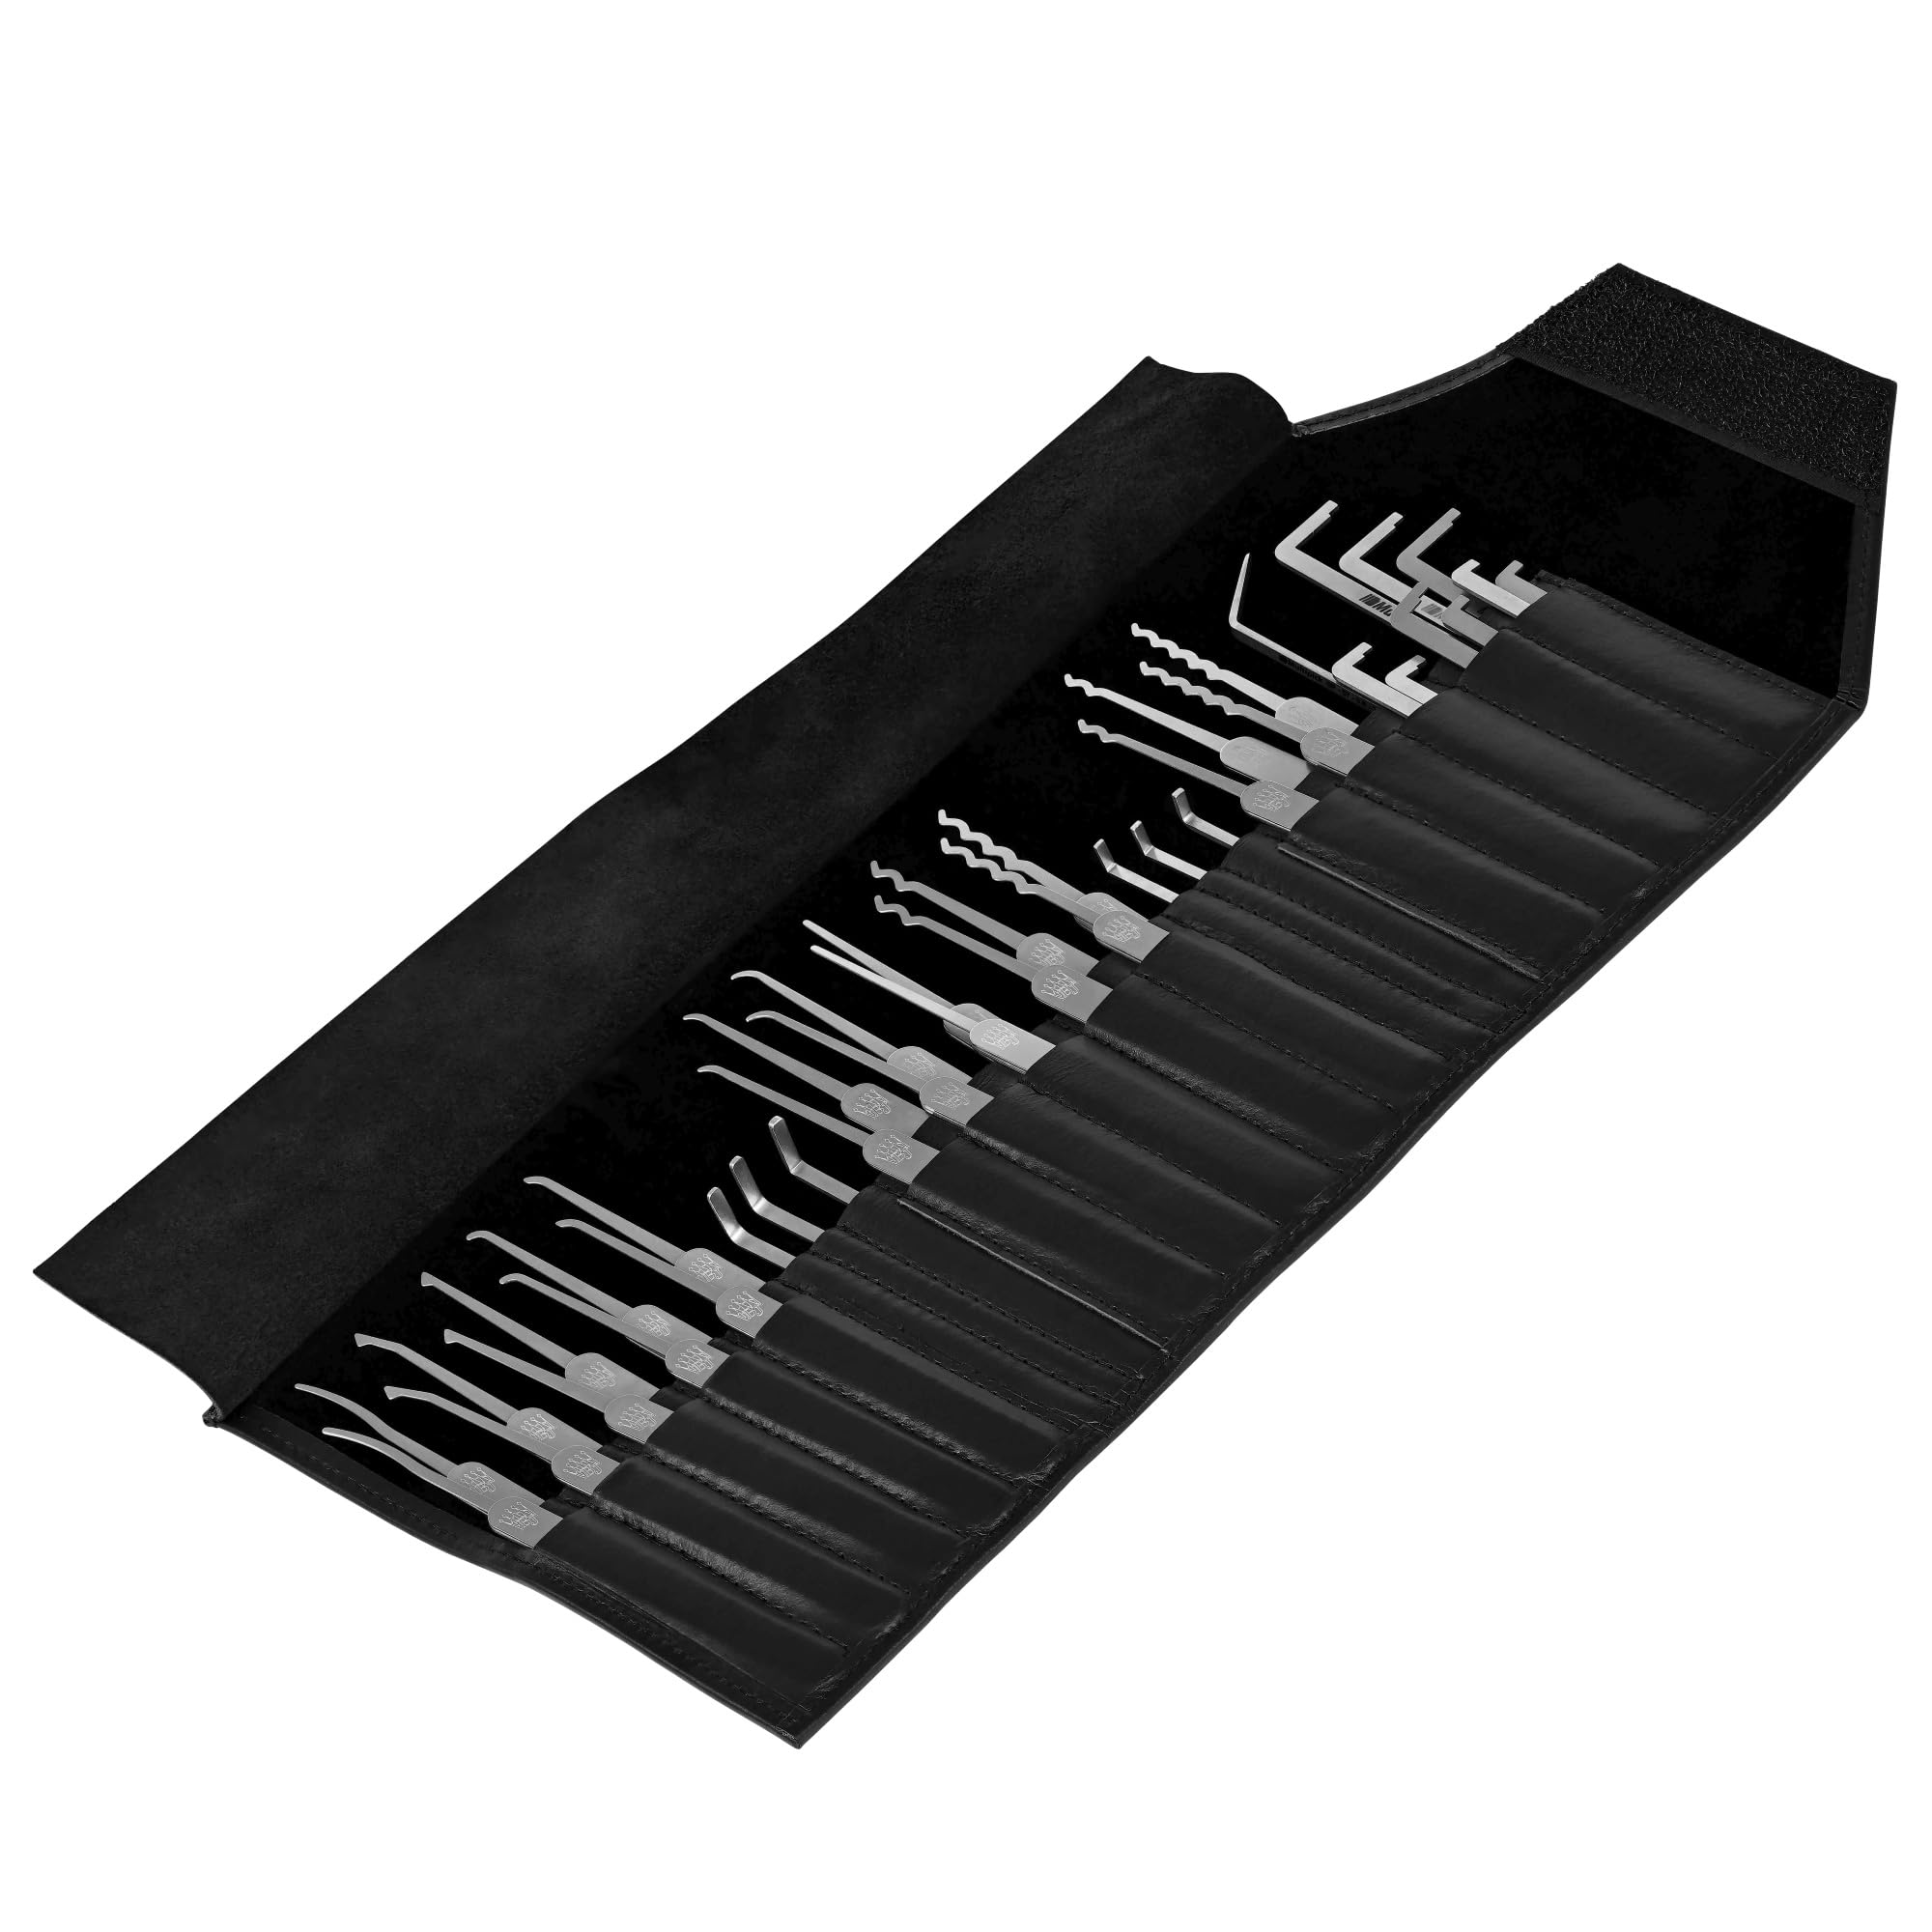 MULTIPICK ELITE 40 Profi Dietrich Set - [40 Tools | 0.4 + 0.6 mm] Made in Germany - Lockpick Tool, Schlösser knacken - Lock Picks inkl. Spanner - Schloss picking - Pick Set - Lockpicking Kit